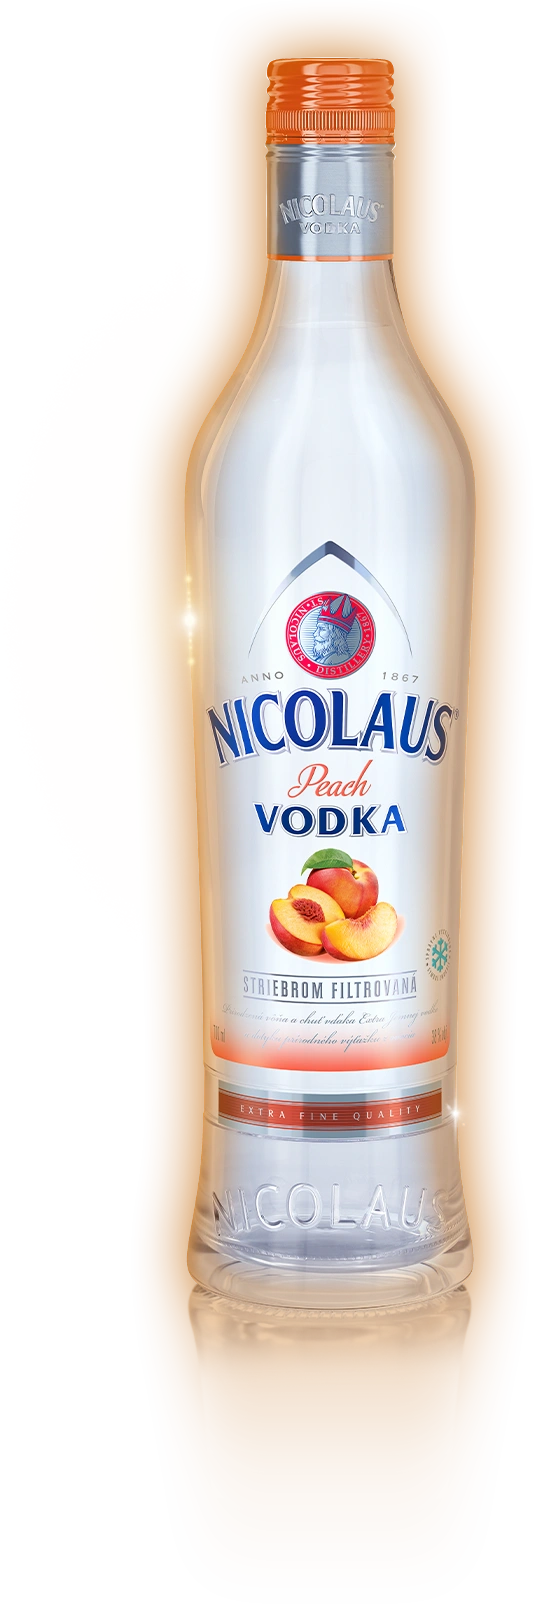 Nicolaus Peach vodka